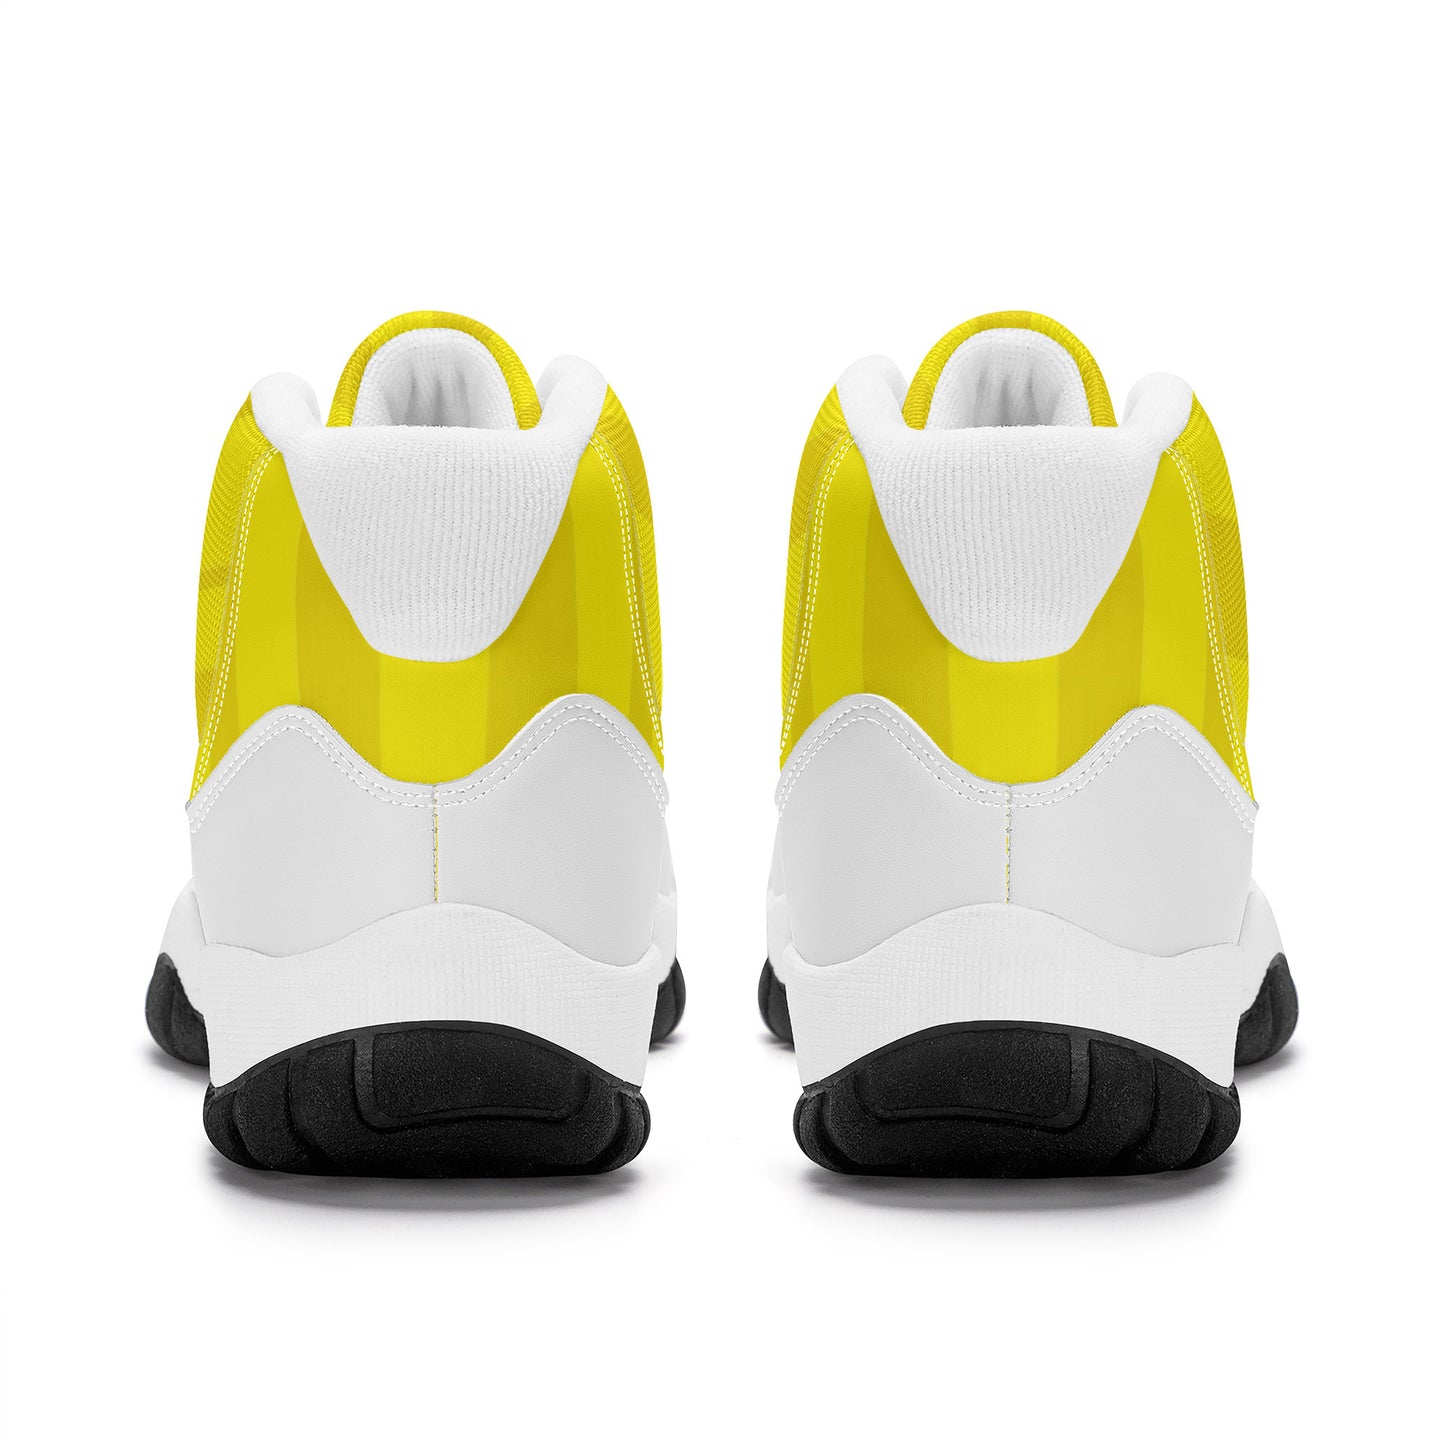 High Top Air Retro Sneakers - Yellow